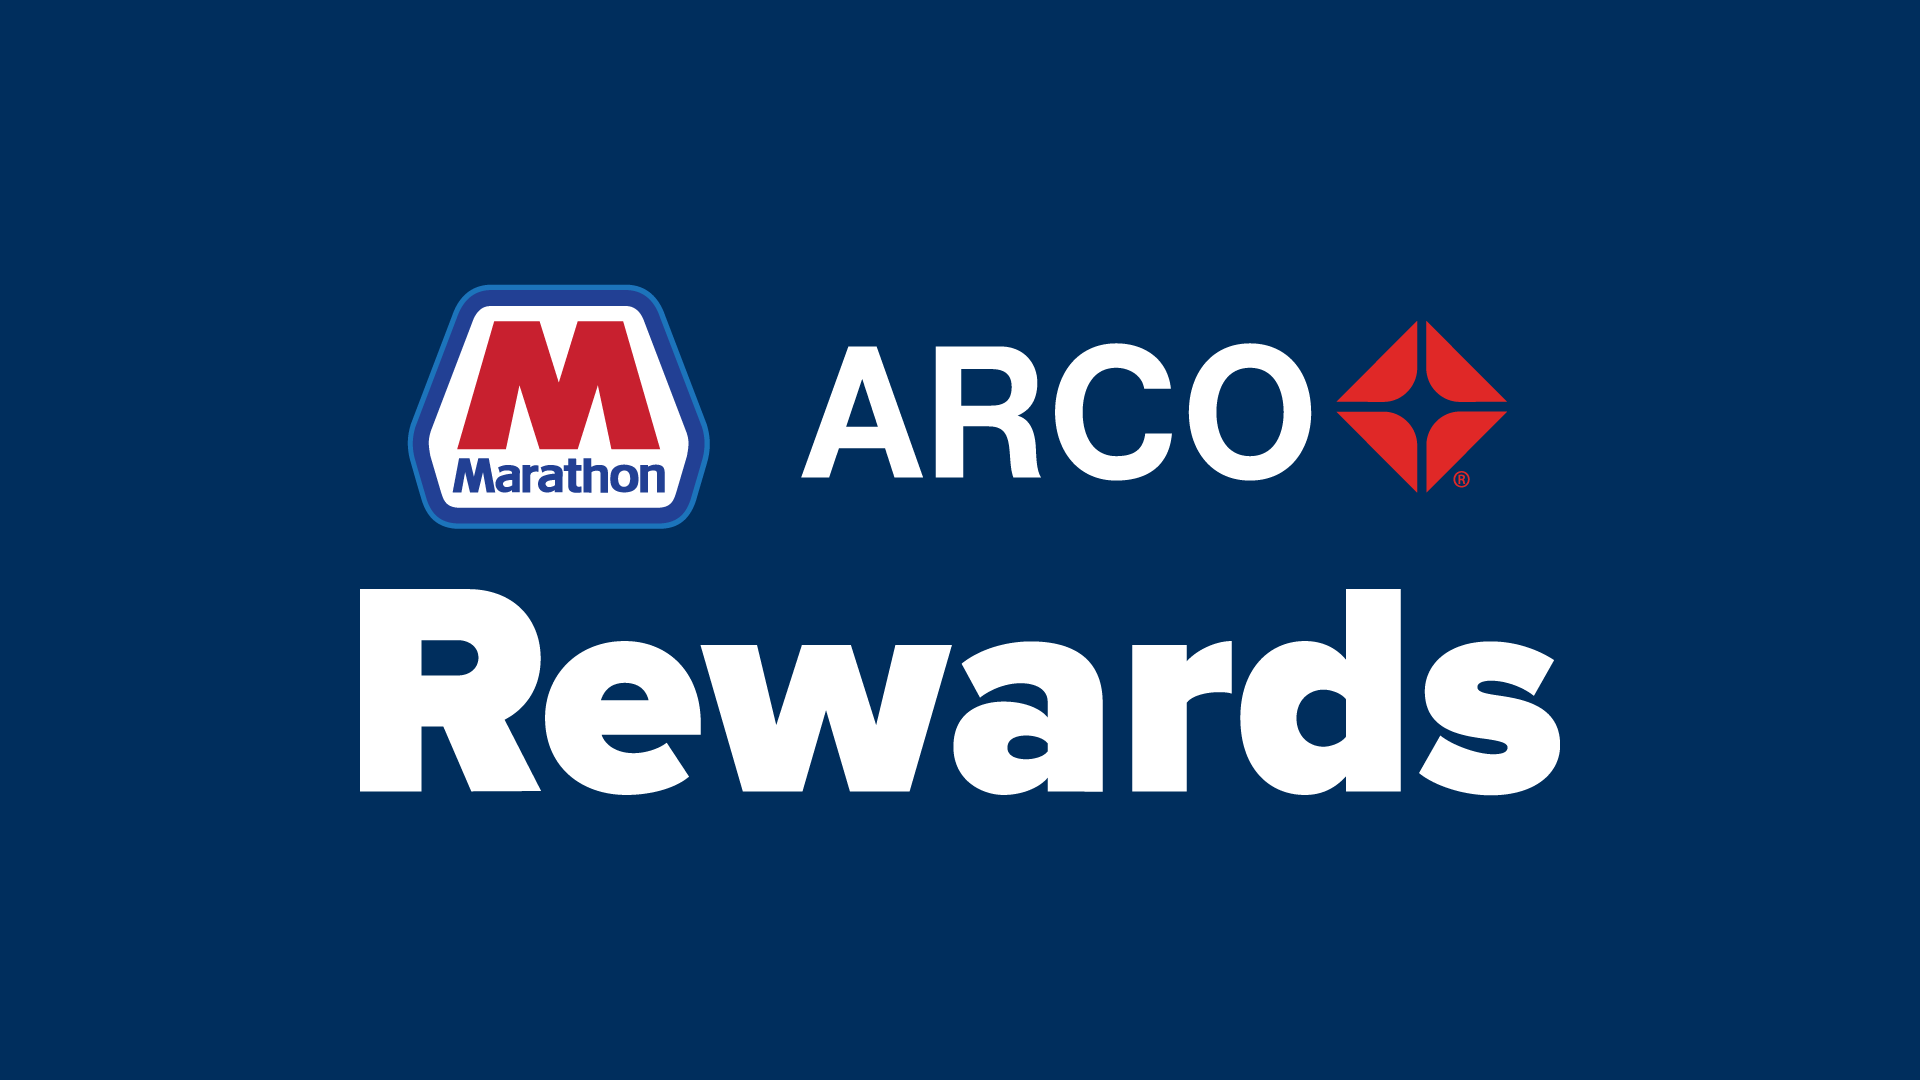 Marathon ARCO Rewards launches redeem at pump feature